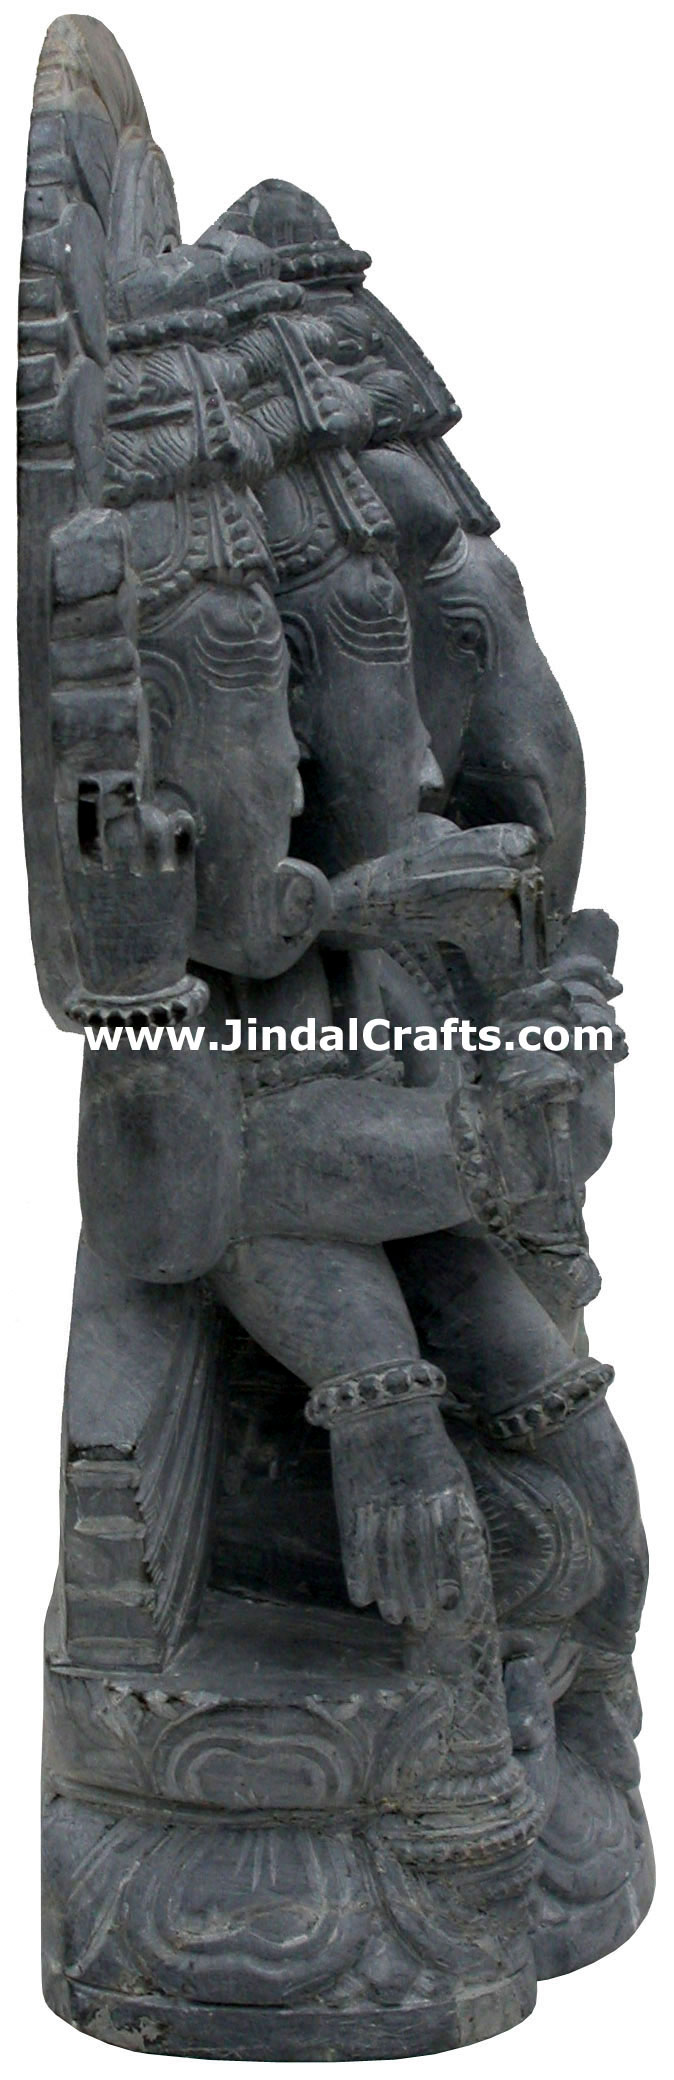 Five Faced Panchmukhi Ganesha Hand Carved Indian God Sculpture Statue Idol Craft